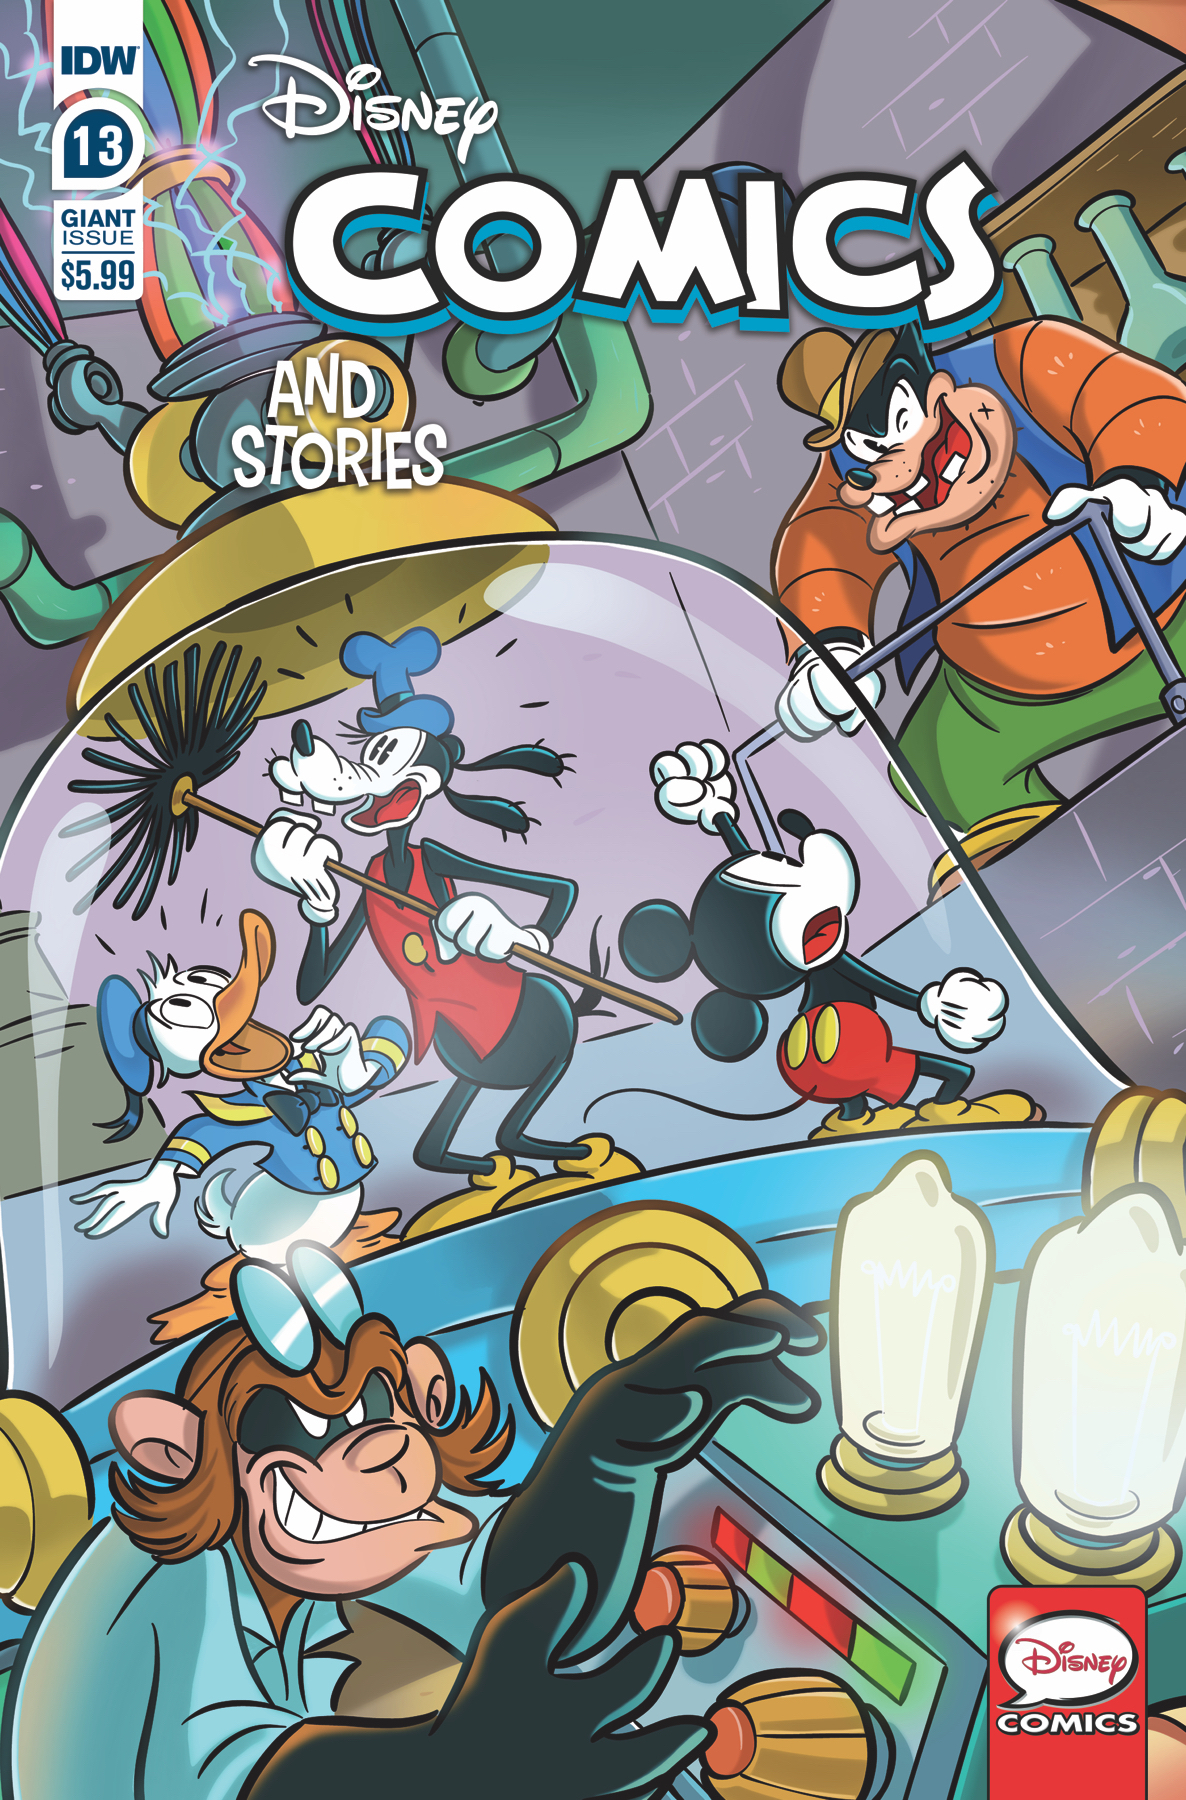 Disney Comics And Stories #13 Cover A Mazzarello